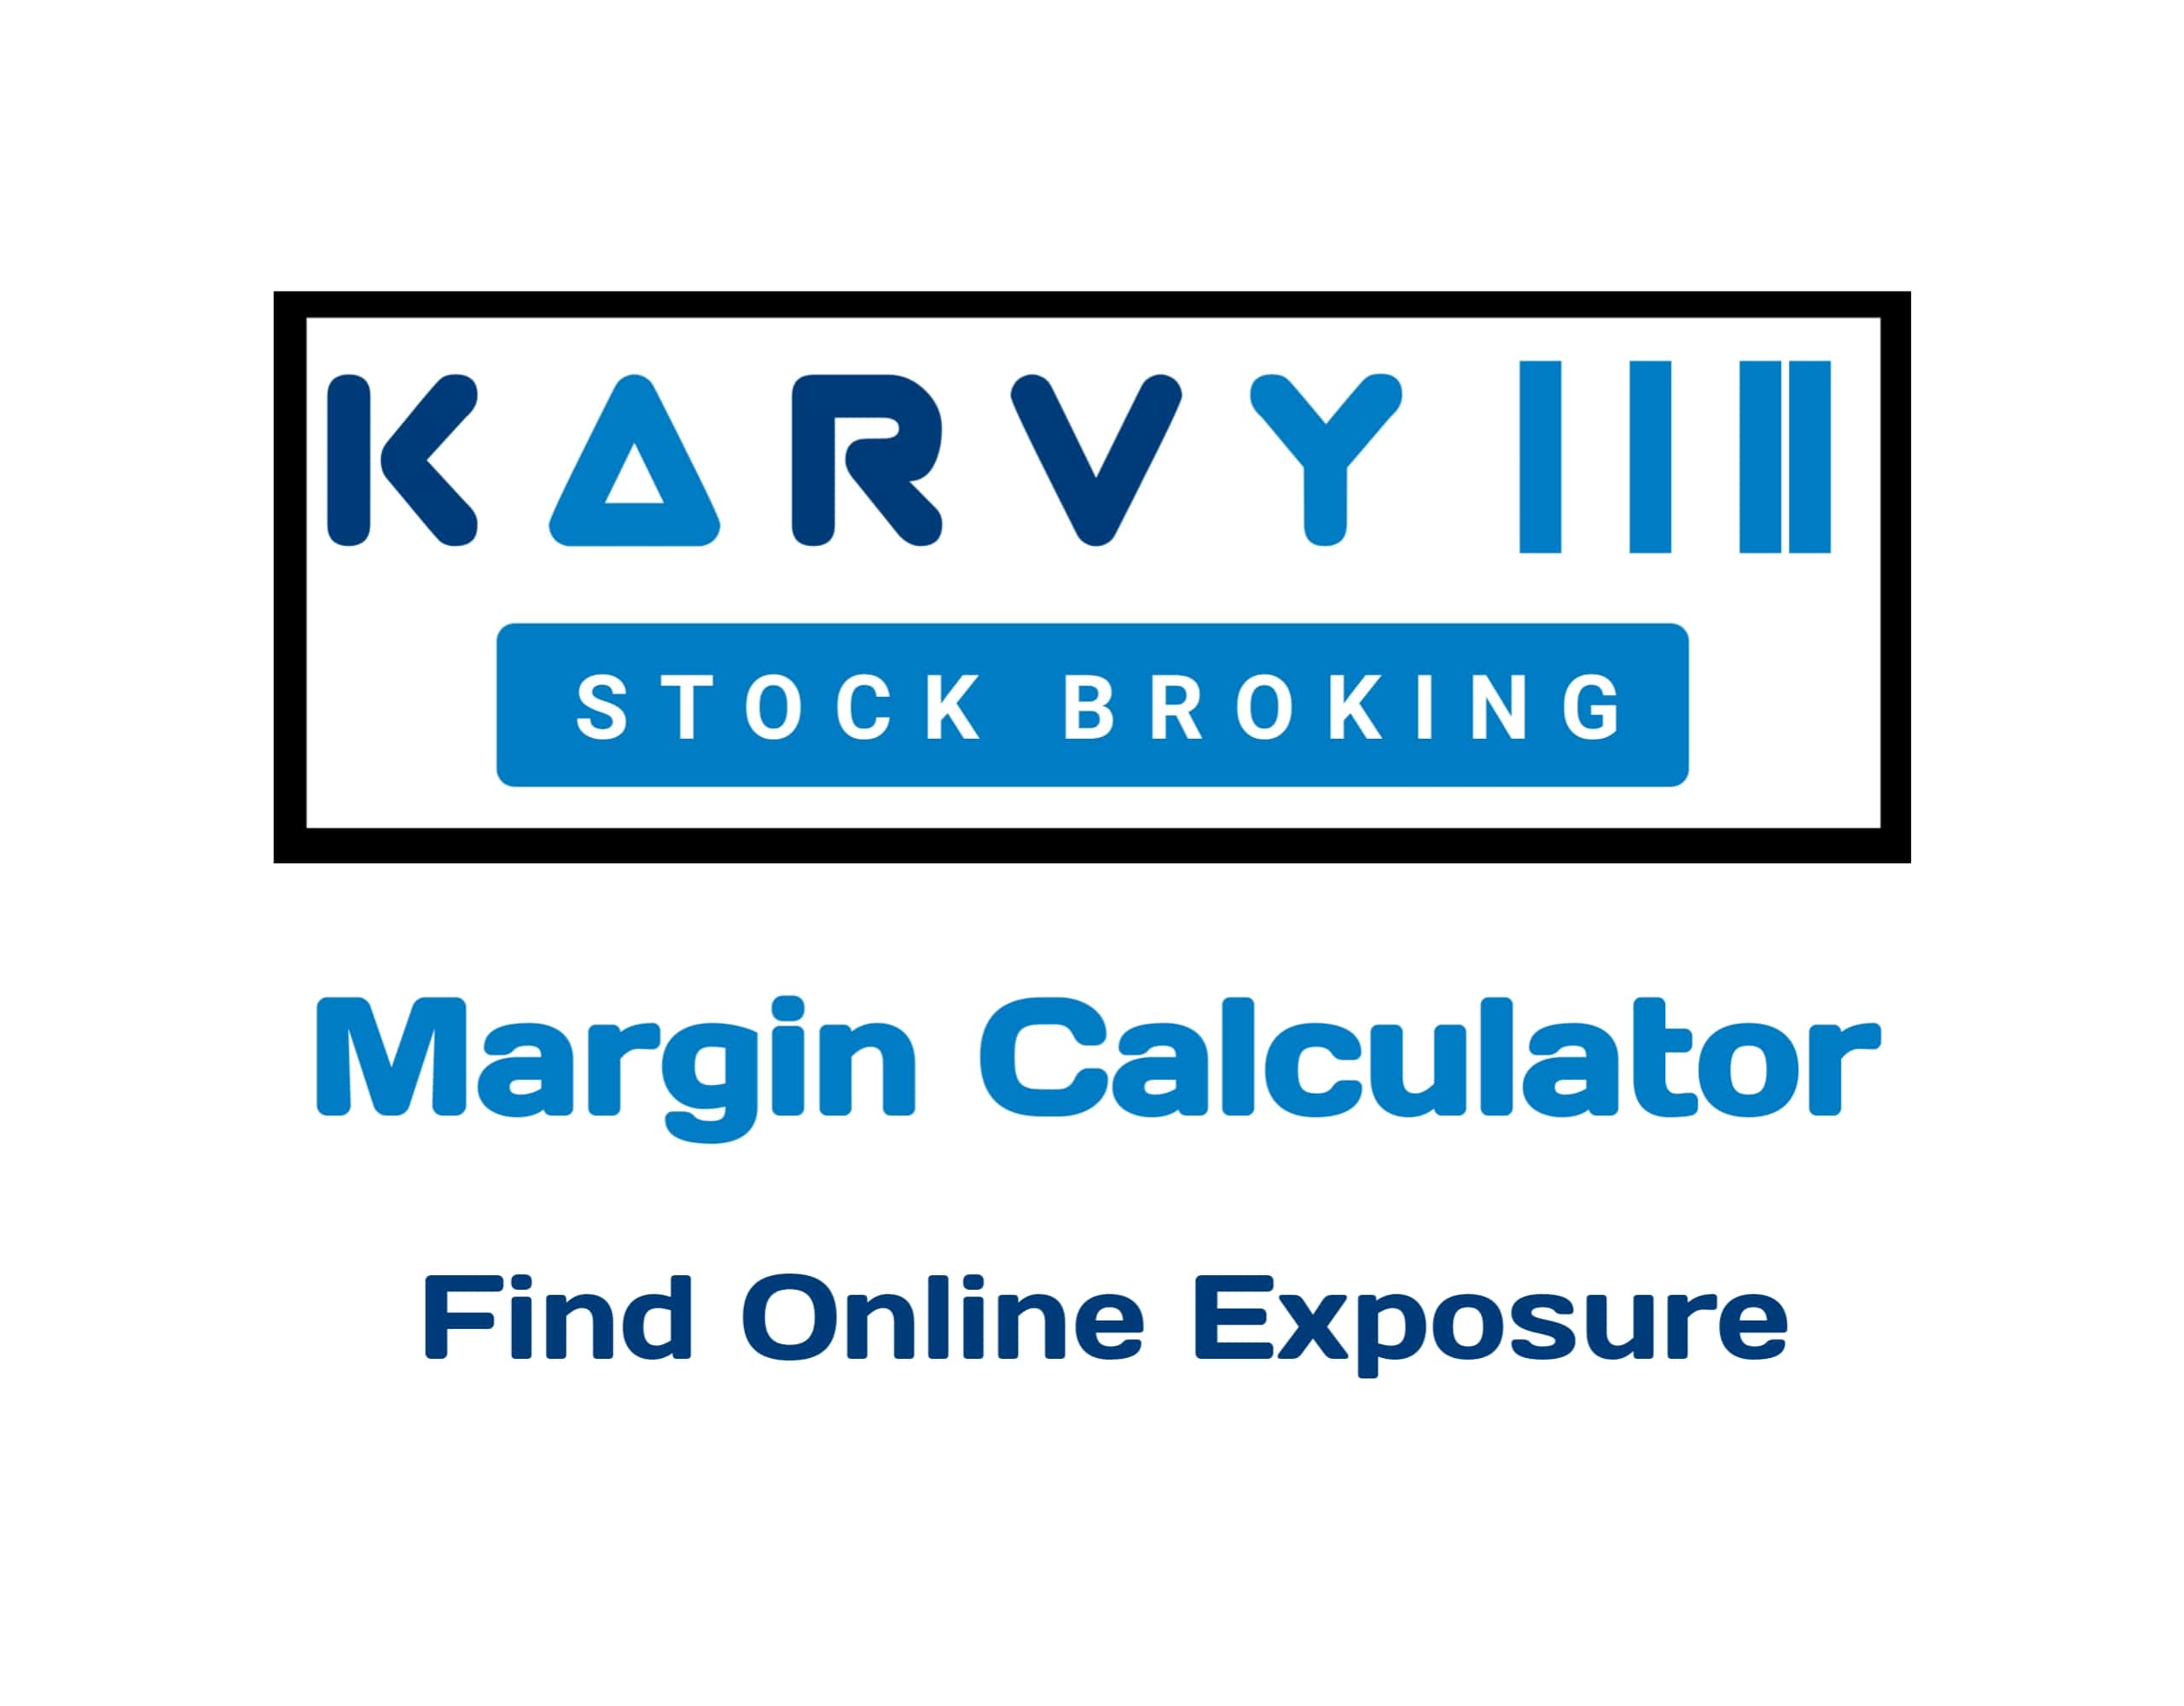 Karvy Margin Calculator